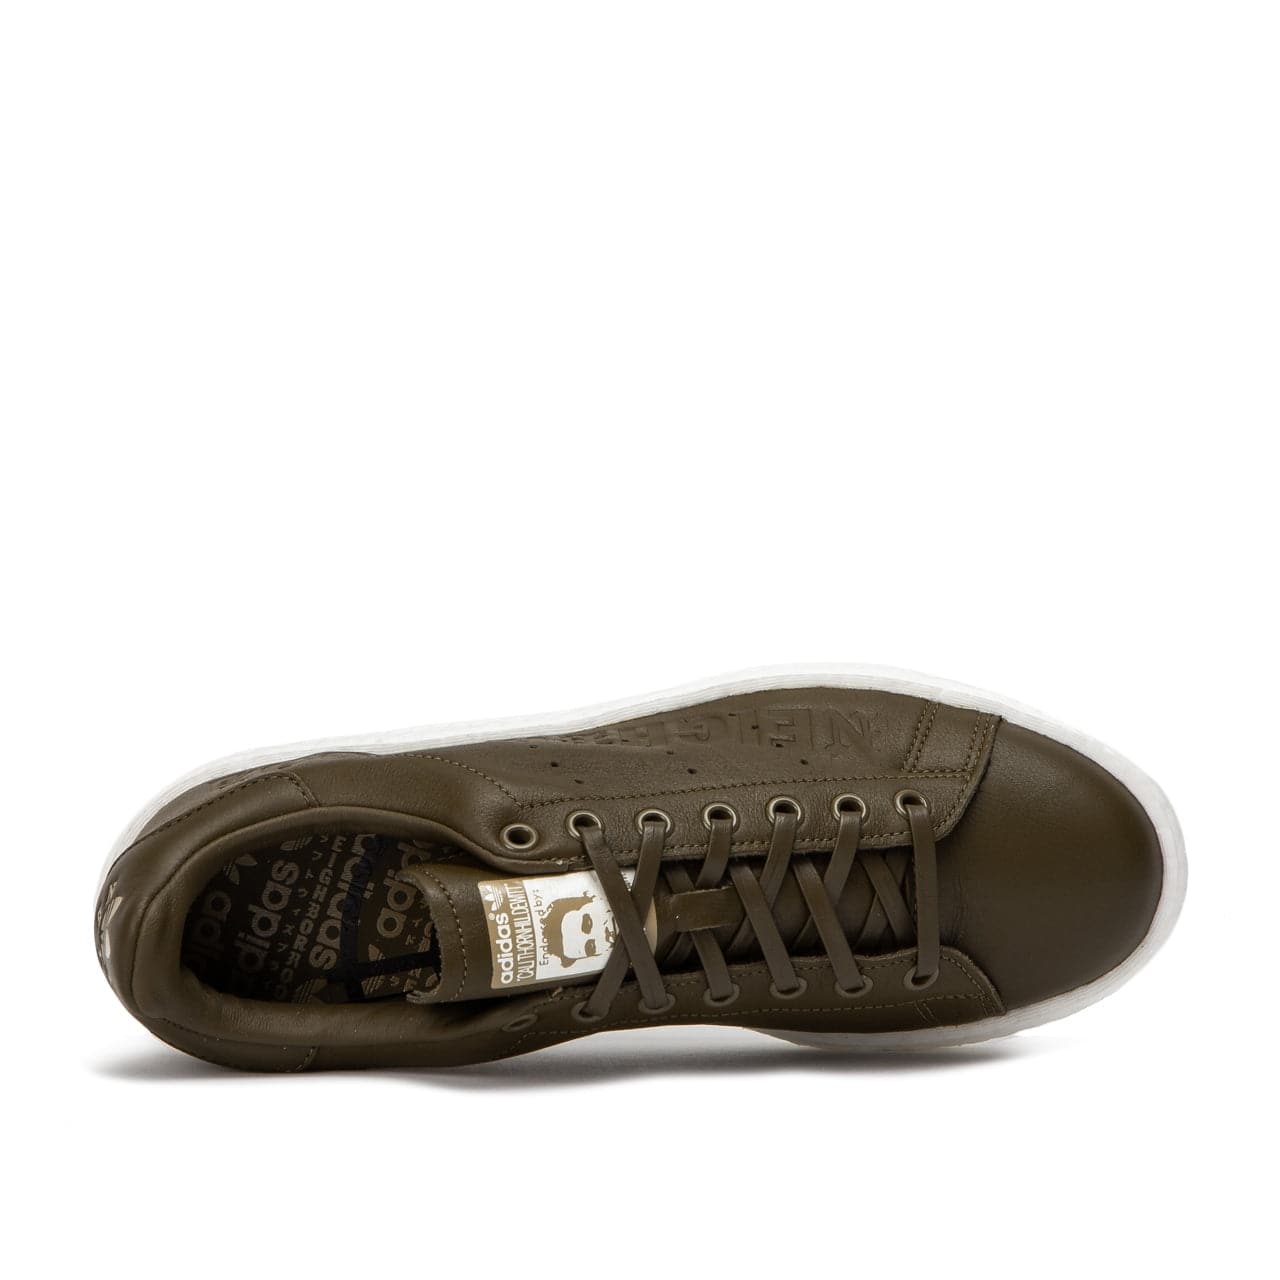 Adidas x NEIGHBORHOOD Stan Smith Boost (Olive)  - Allike Store